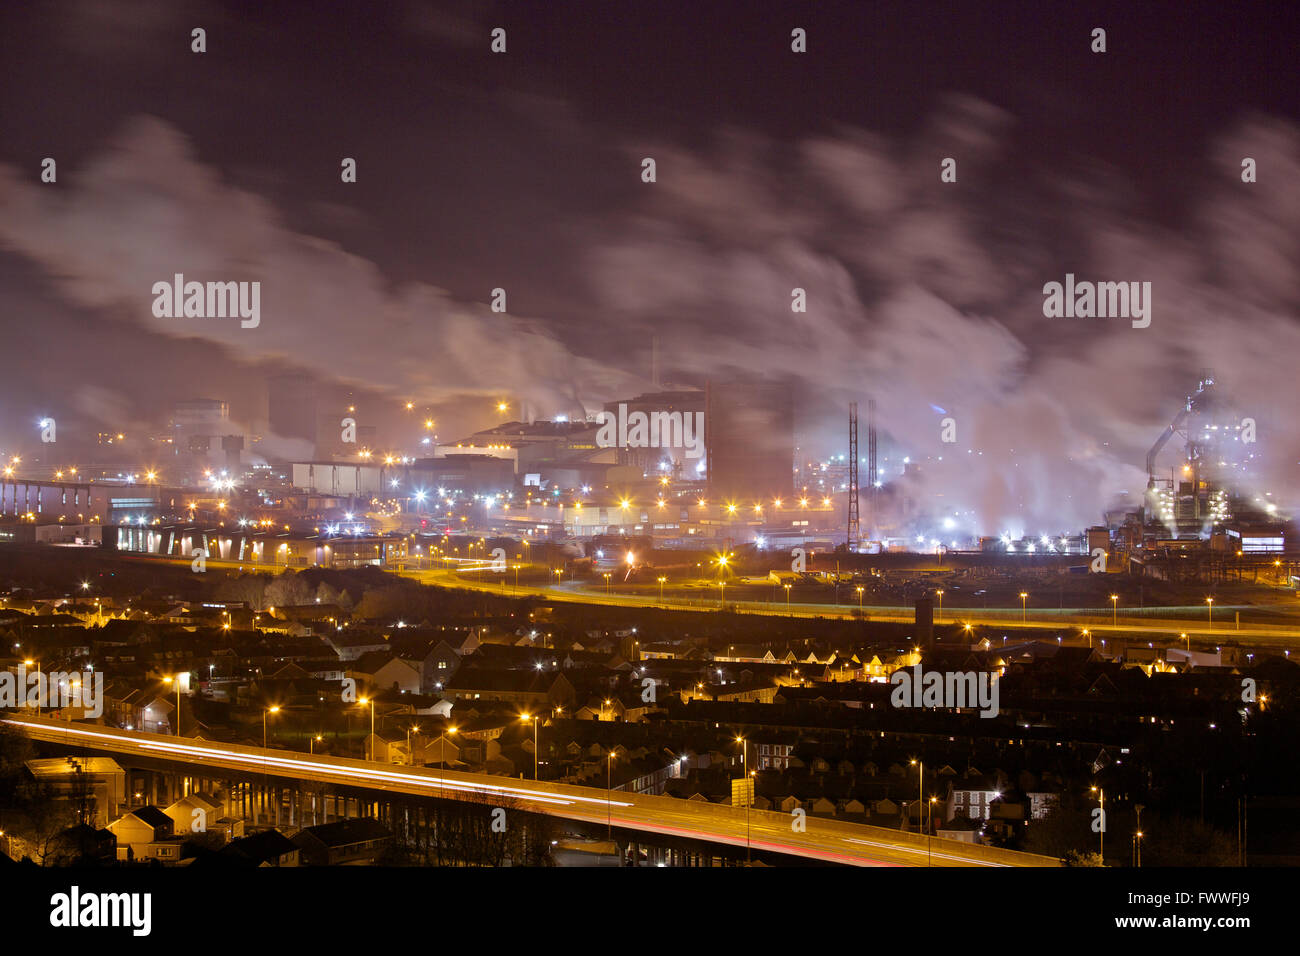 Tata Steel works, Port Talbot, South Wales, UK. Night scene at Port Talbot steelworks, South Wales UK. Stock Photo